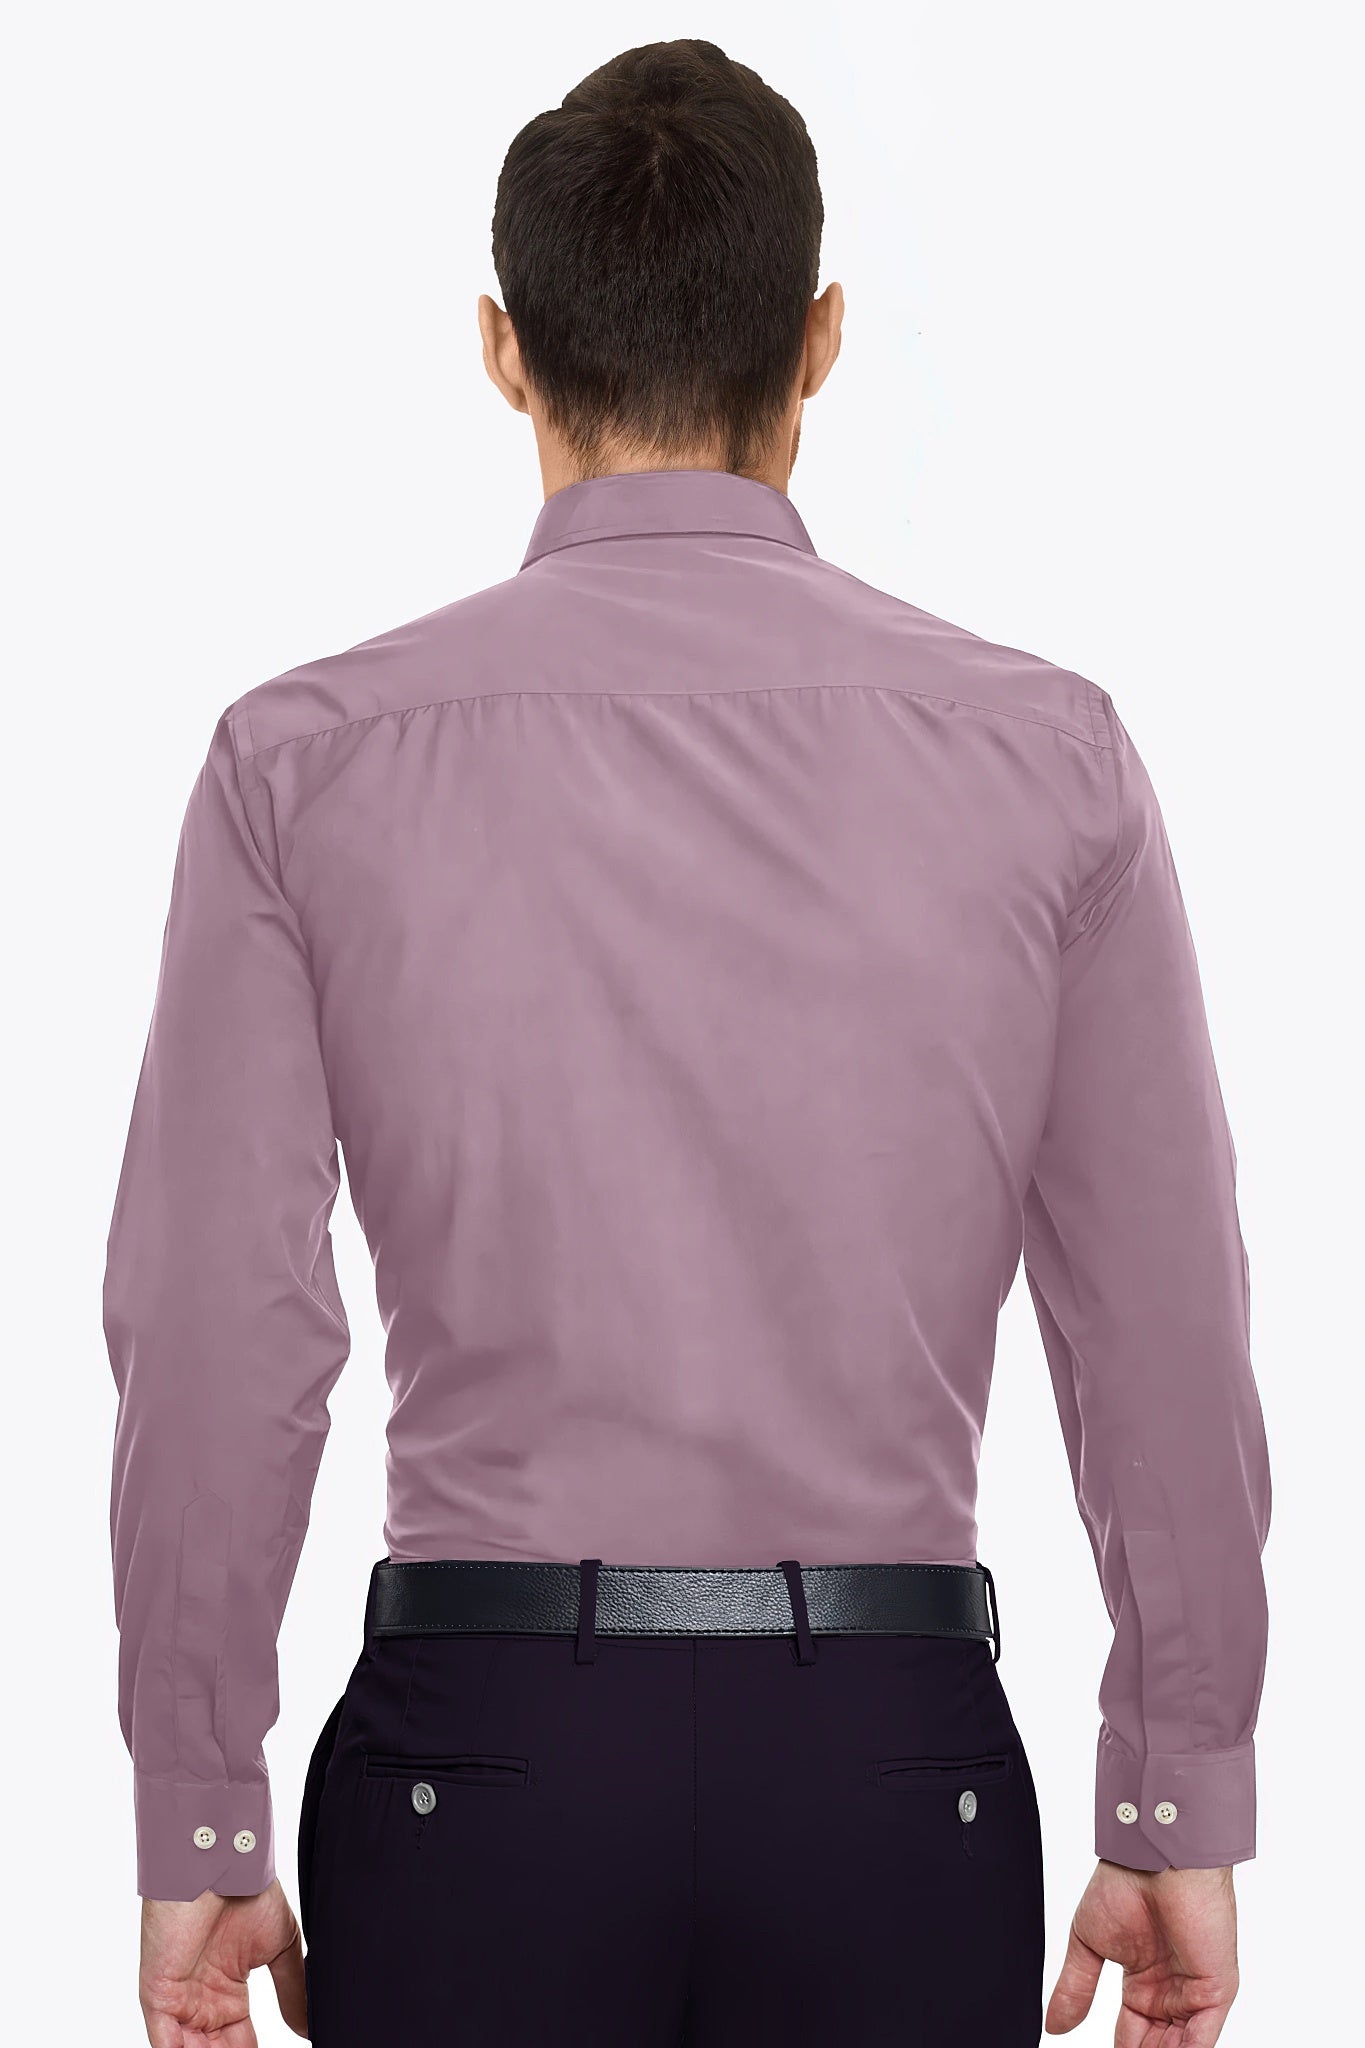 Millennial Pink Giza Cotton Shirt